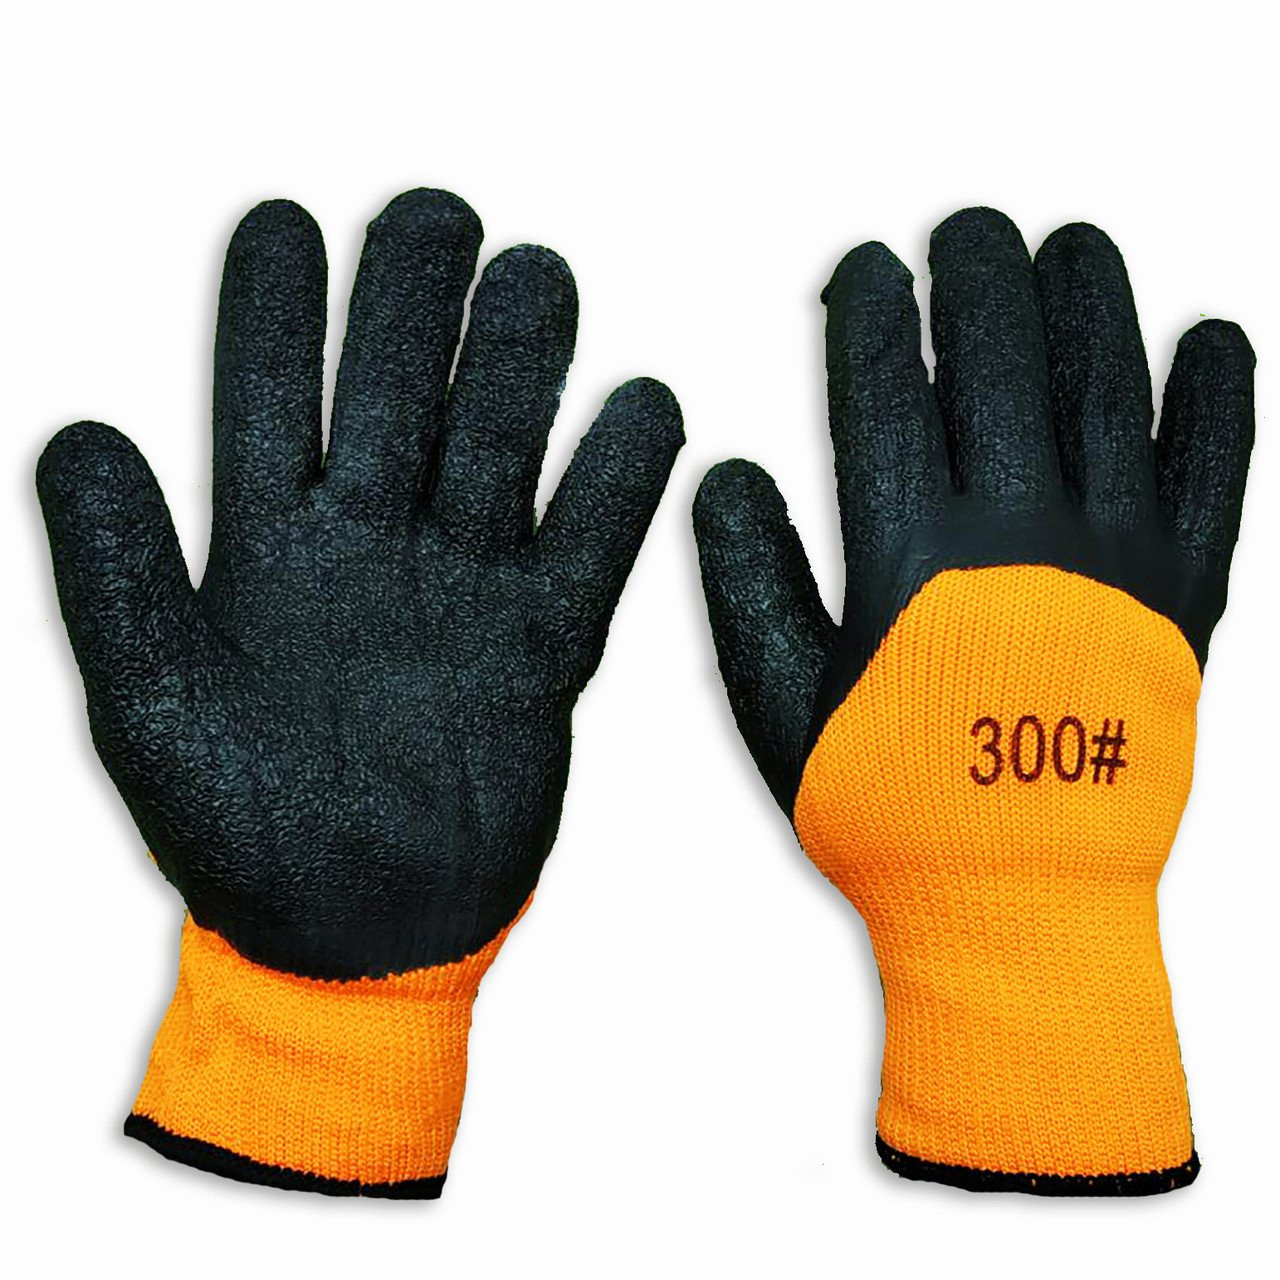 Protective gloves photo No. 1